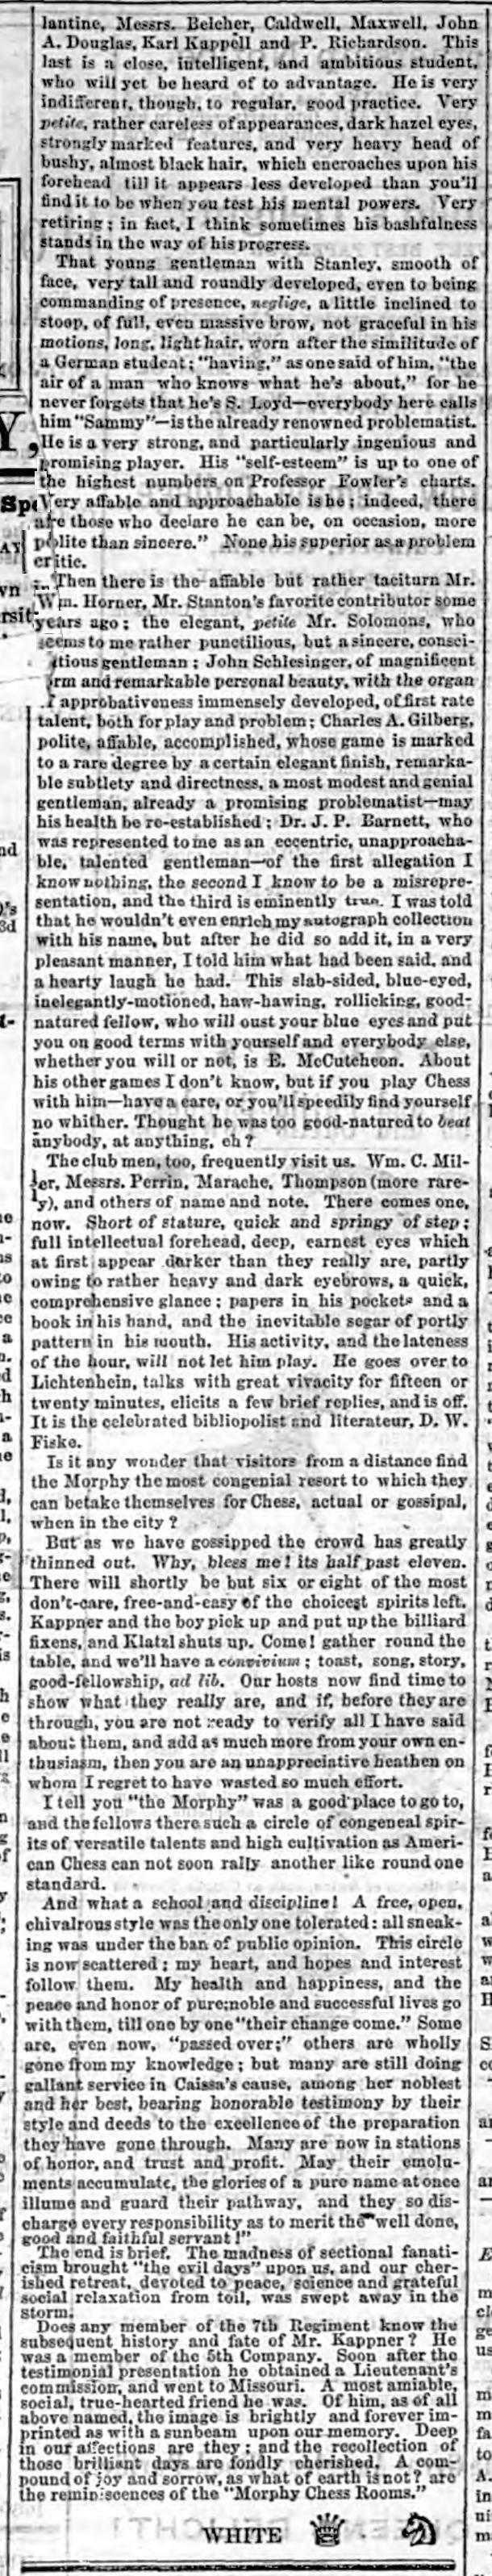 1867.08.23-02 Macon Georgia Weekly Telegraph.jpg